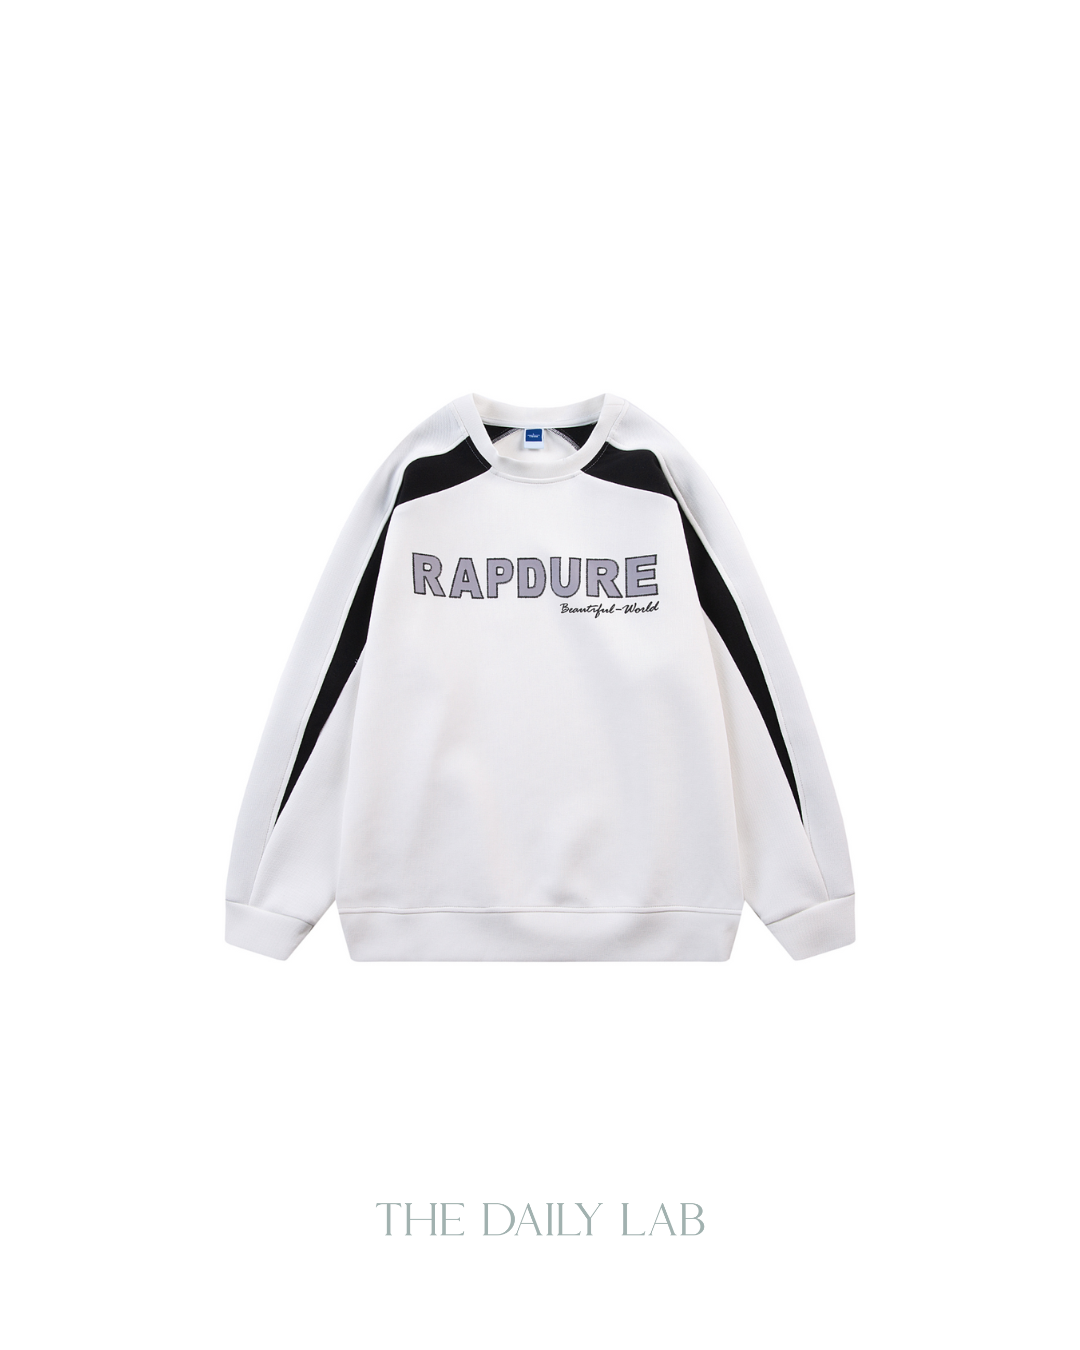 Rapdure Sweater in White